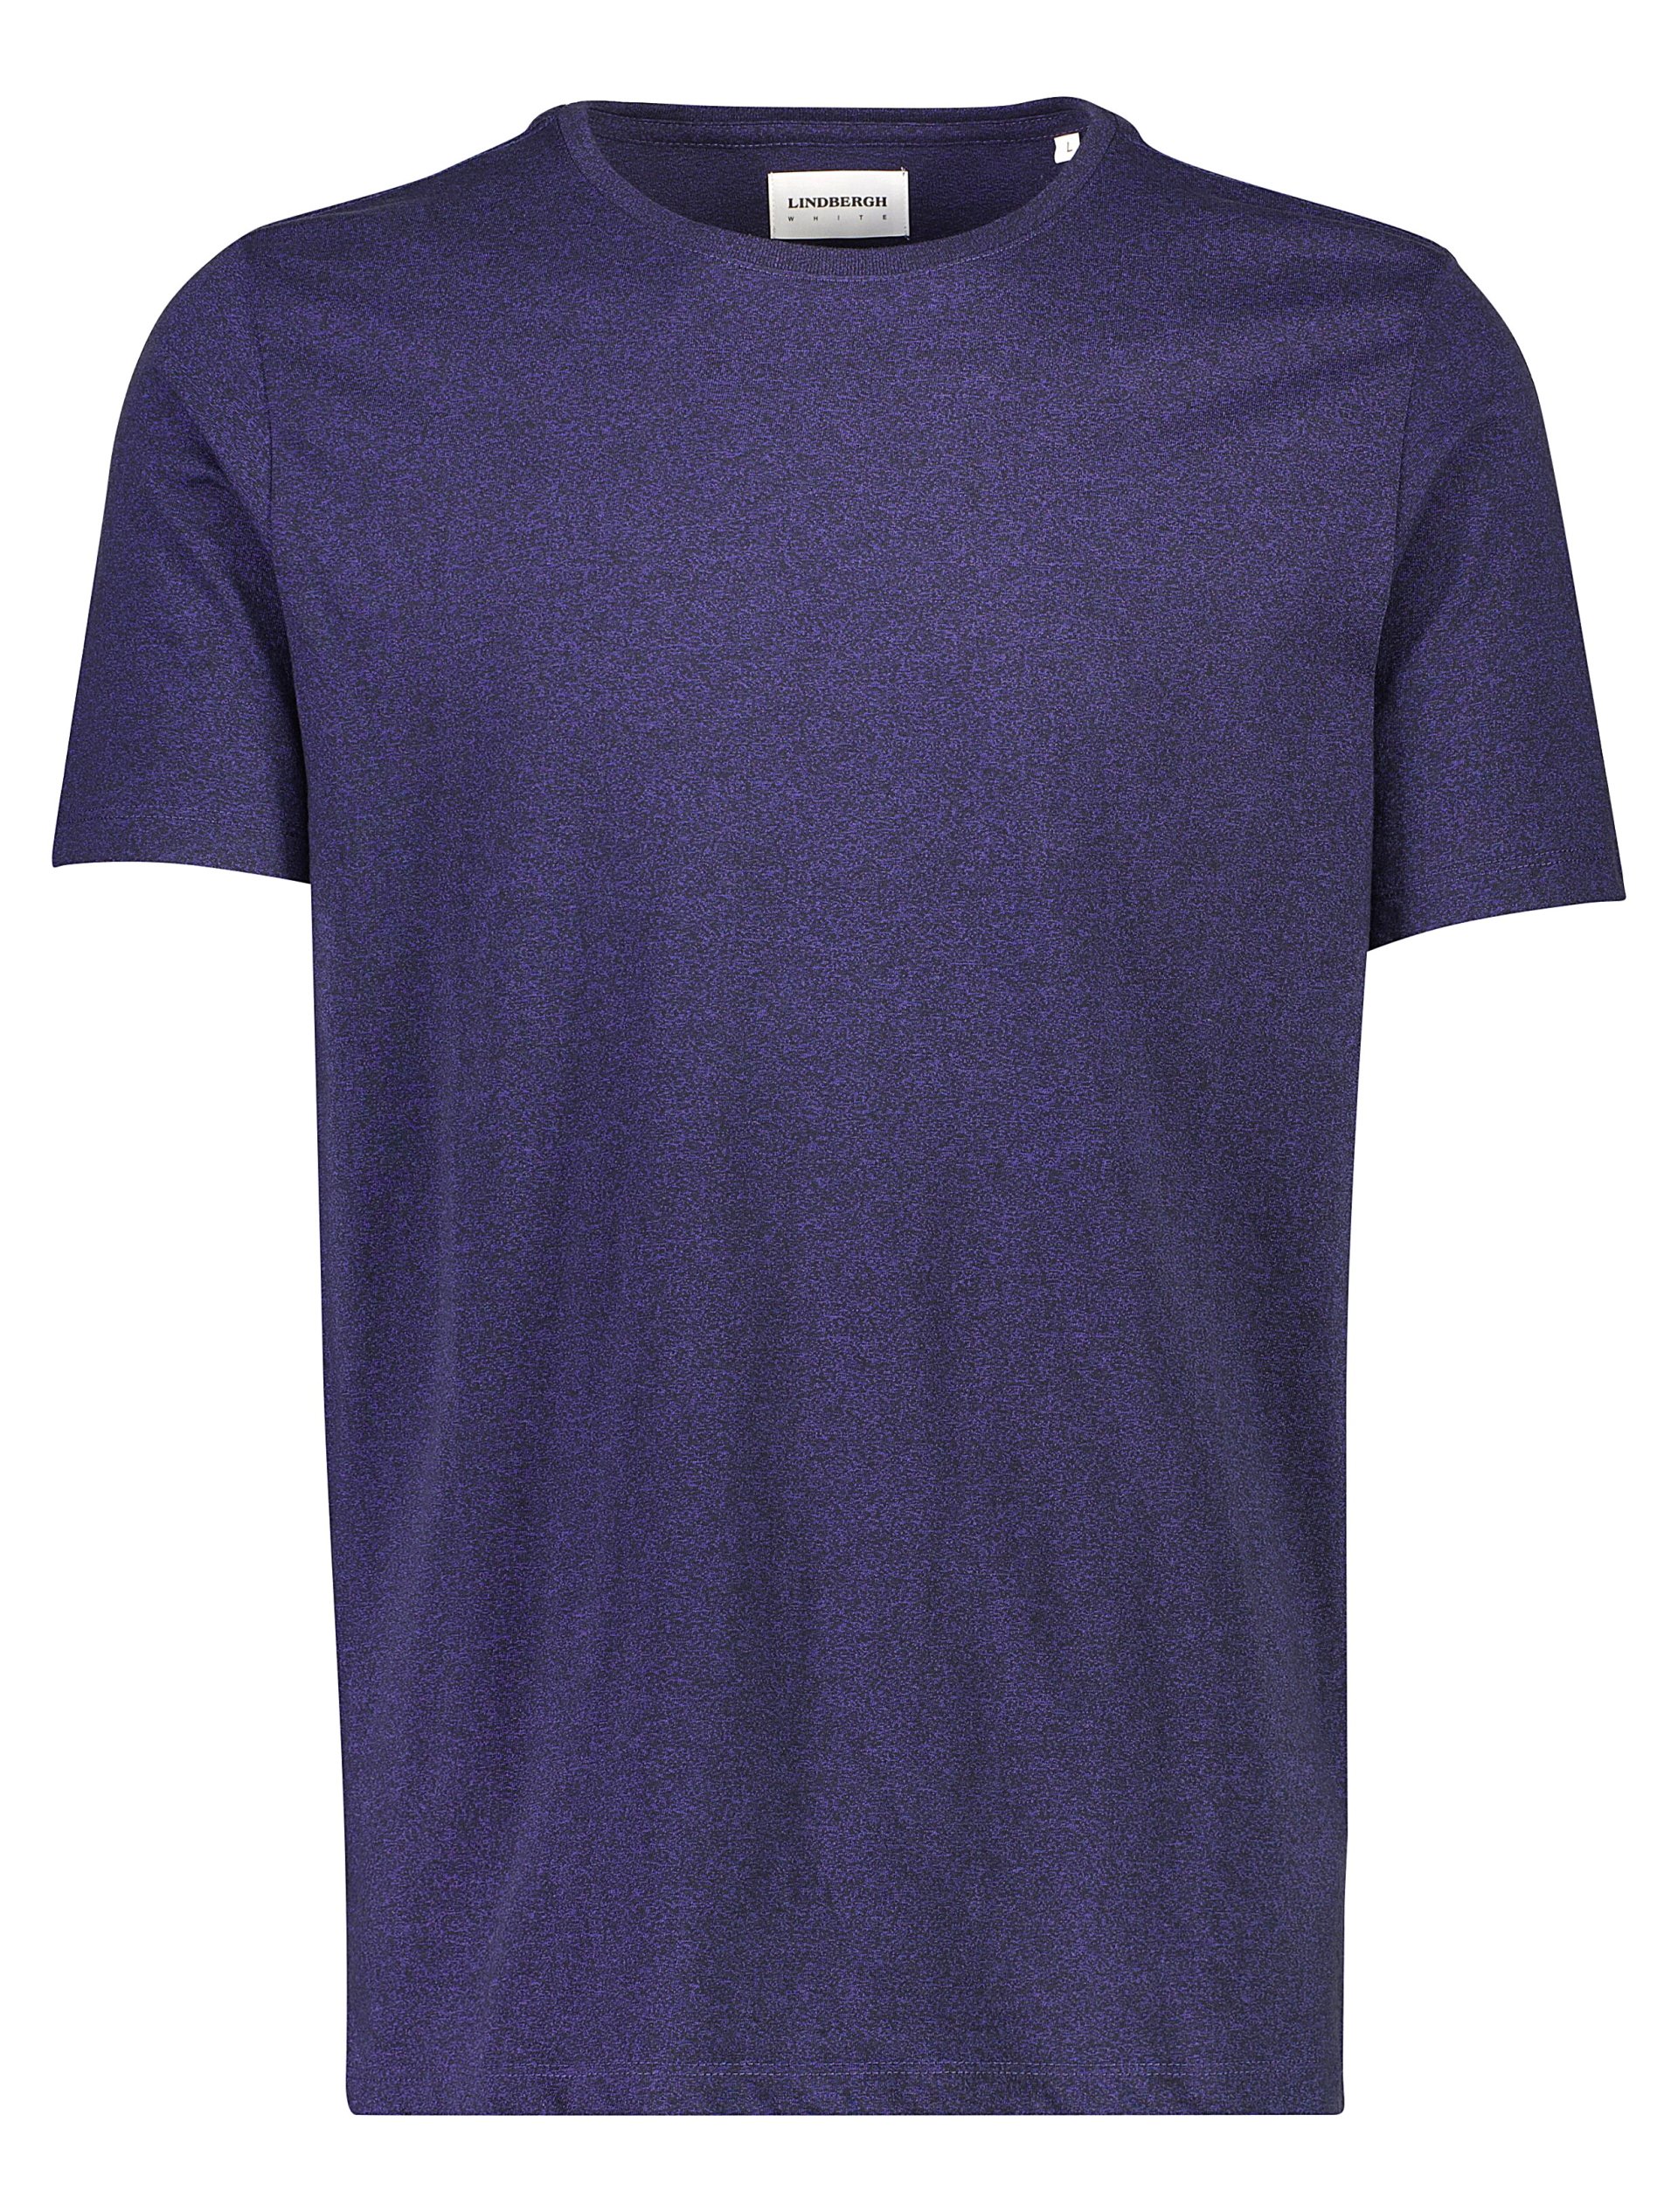 Lindbergh T-Shirt lila / dark purple